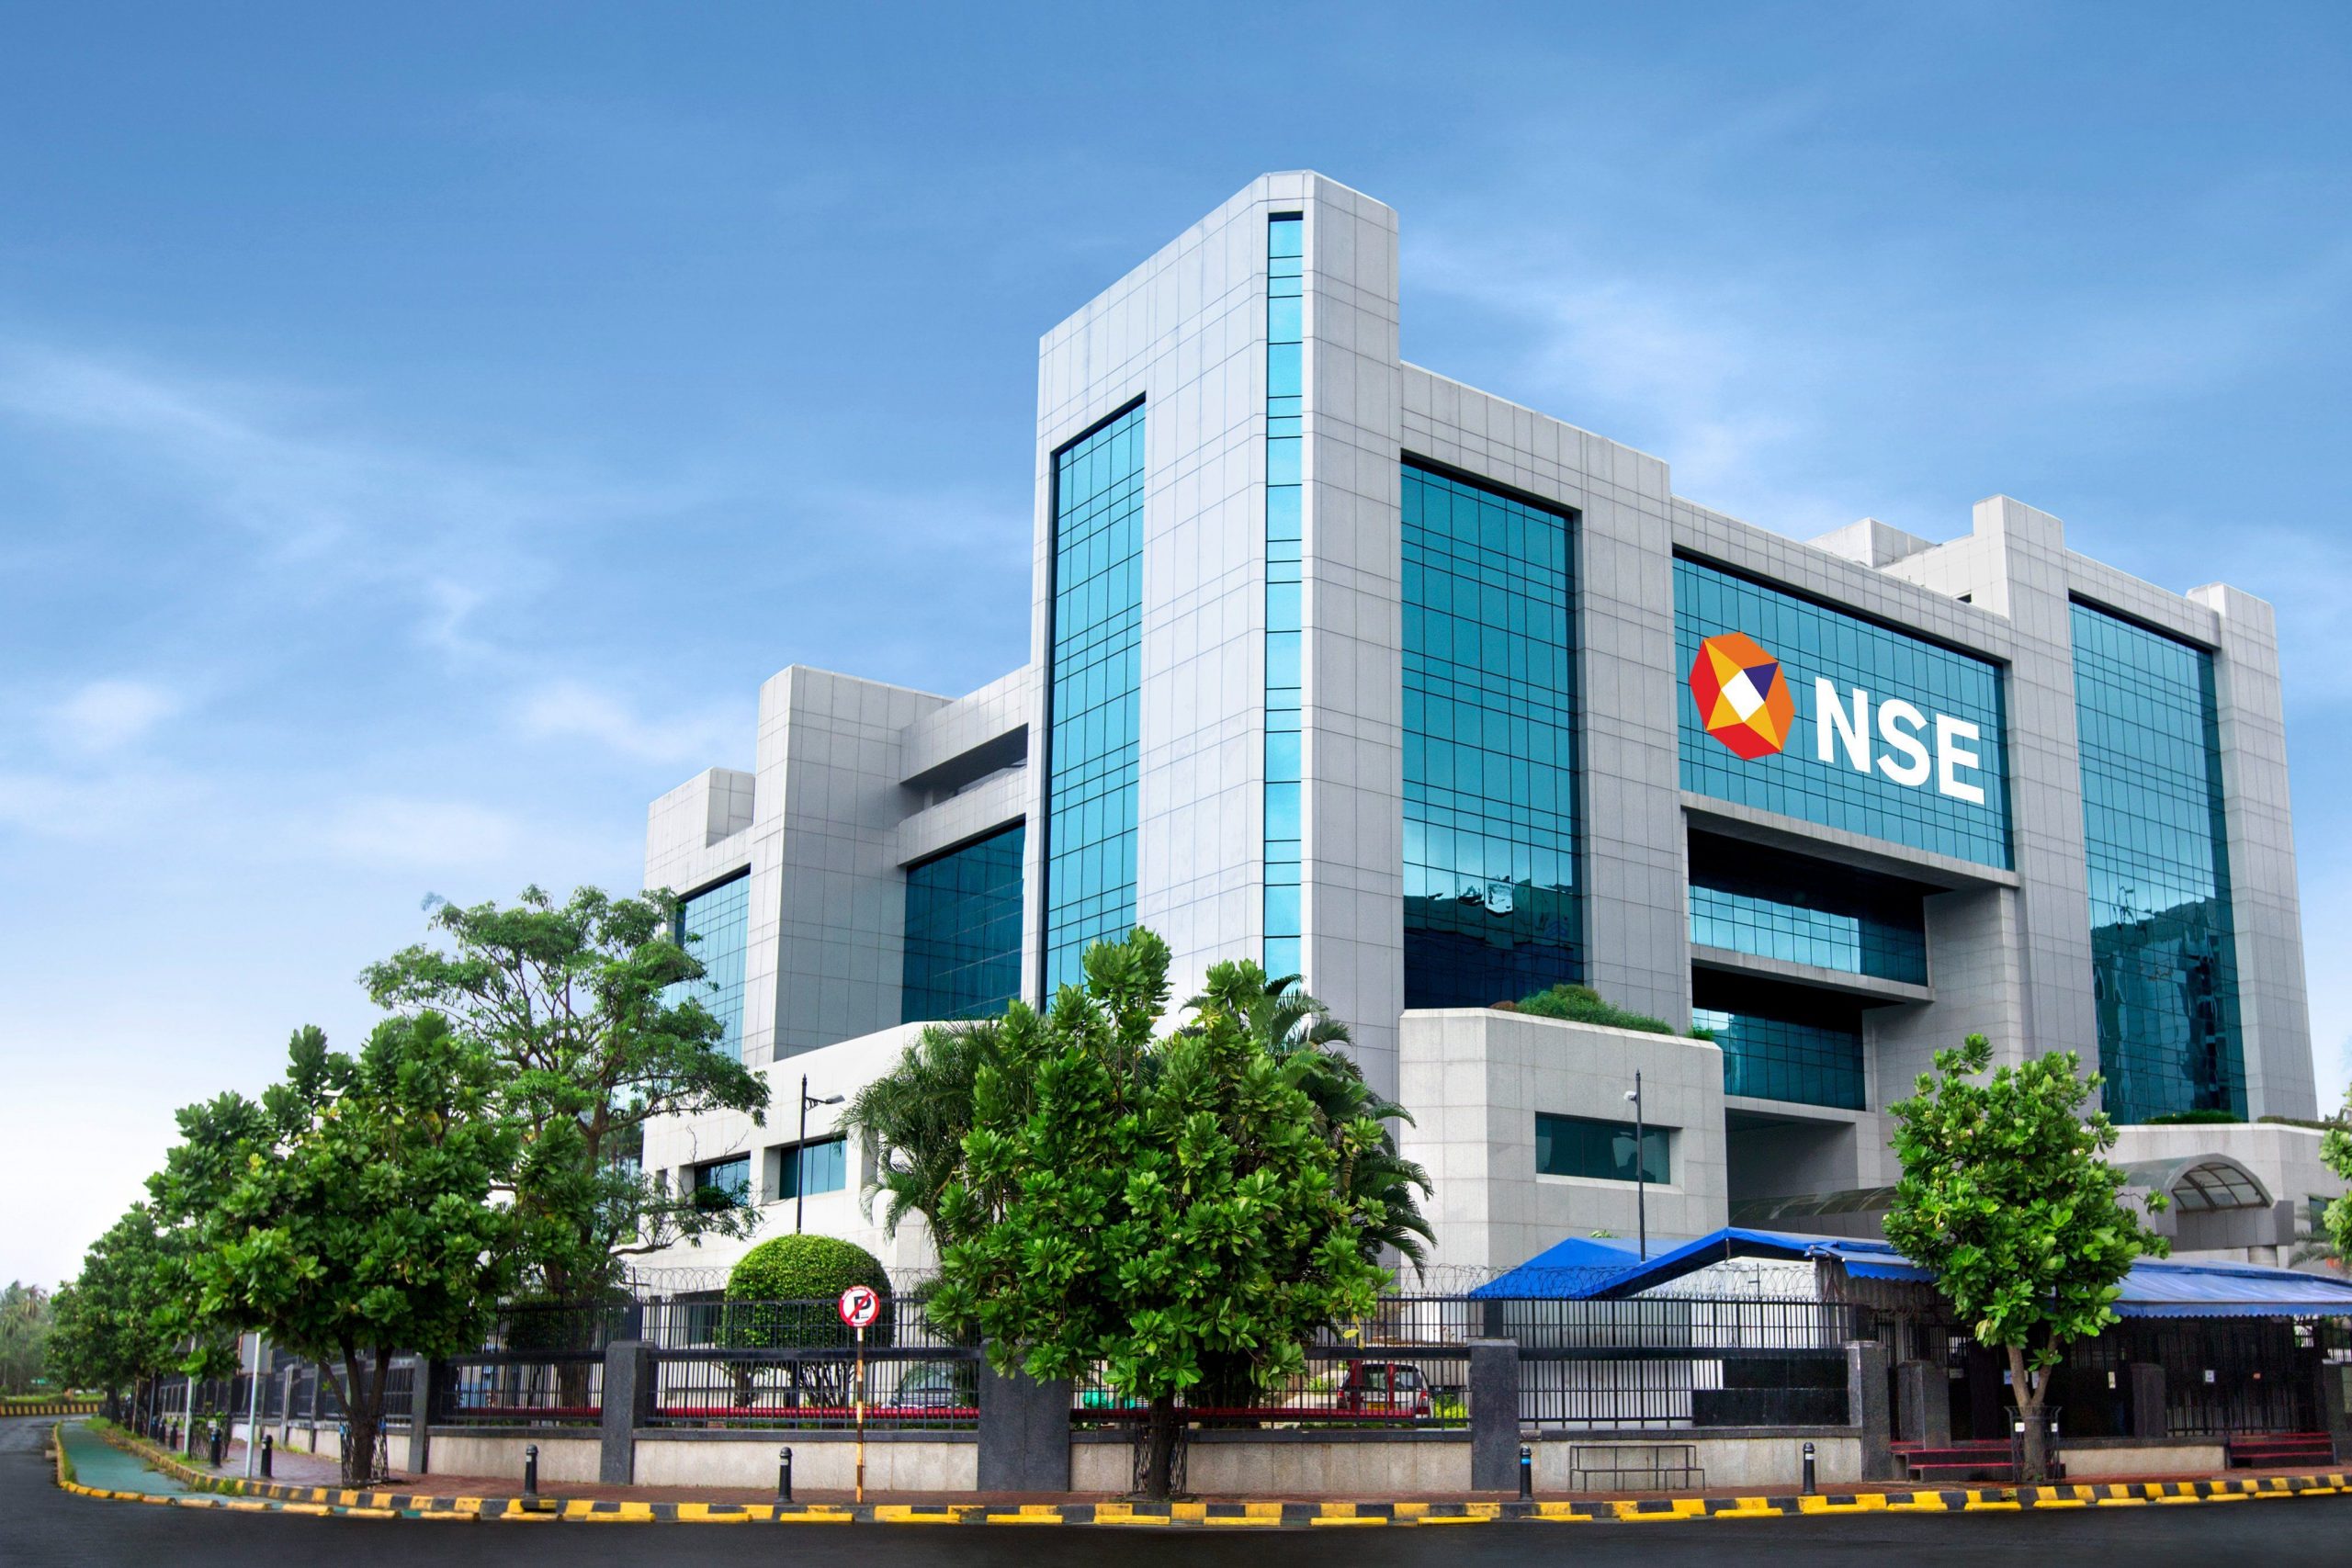 NSE F&O Ban: RBL Bank and others under ban on Friday, July 22, 2022